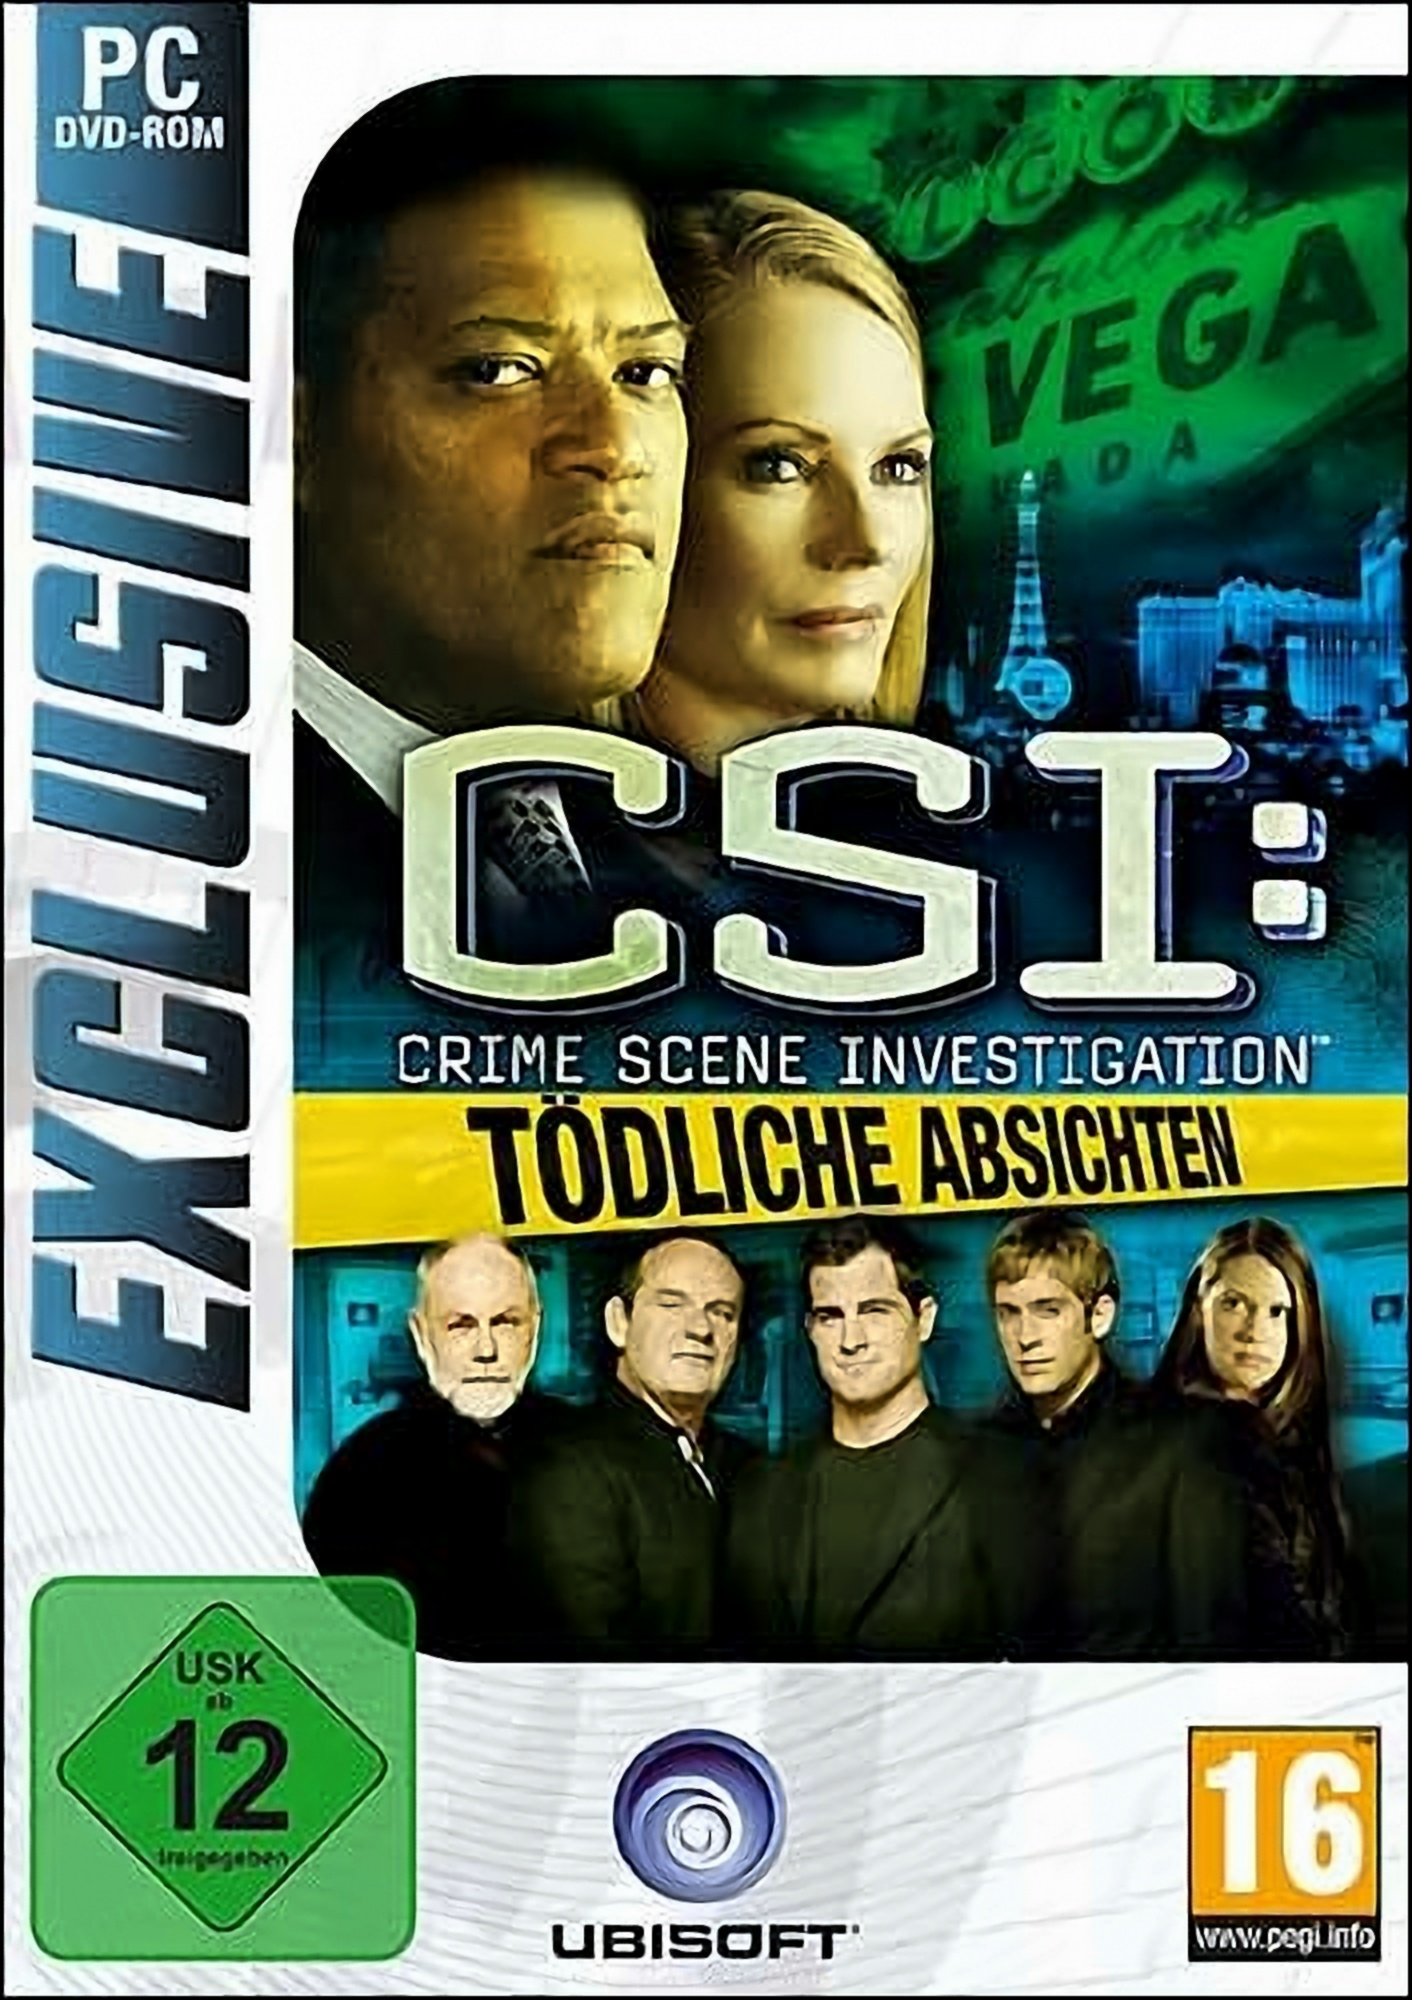 Investigation: Tödliche Scene Crime - - Absichten CSI [PC]